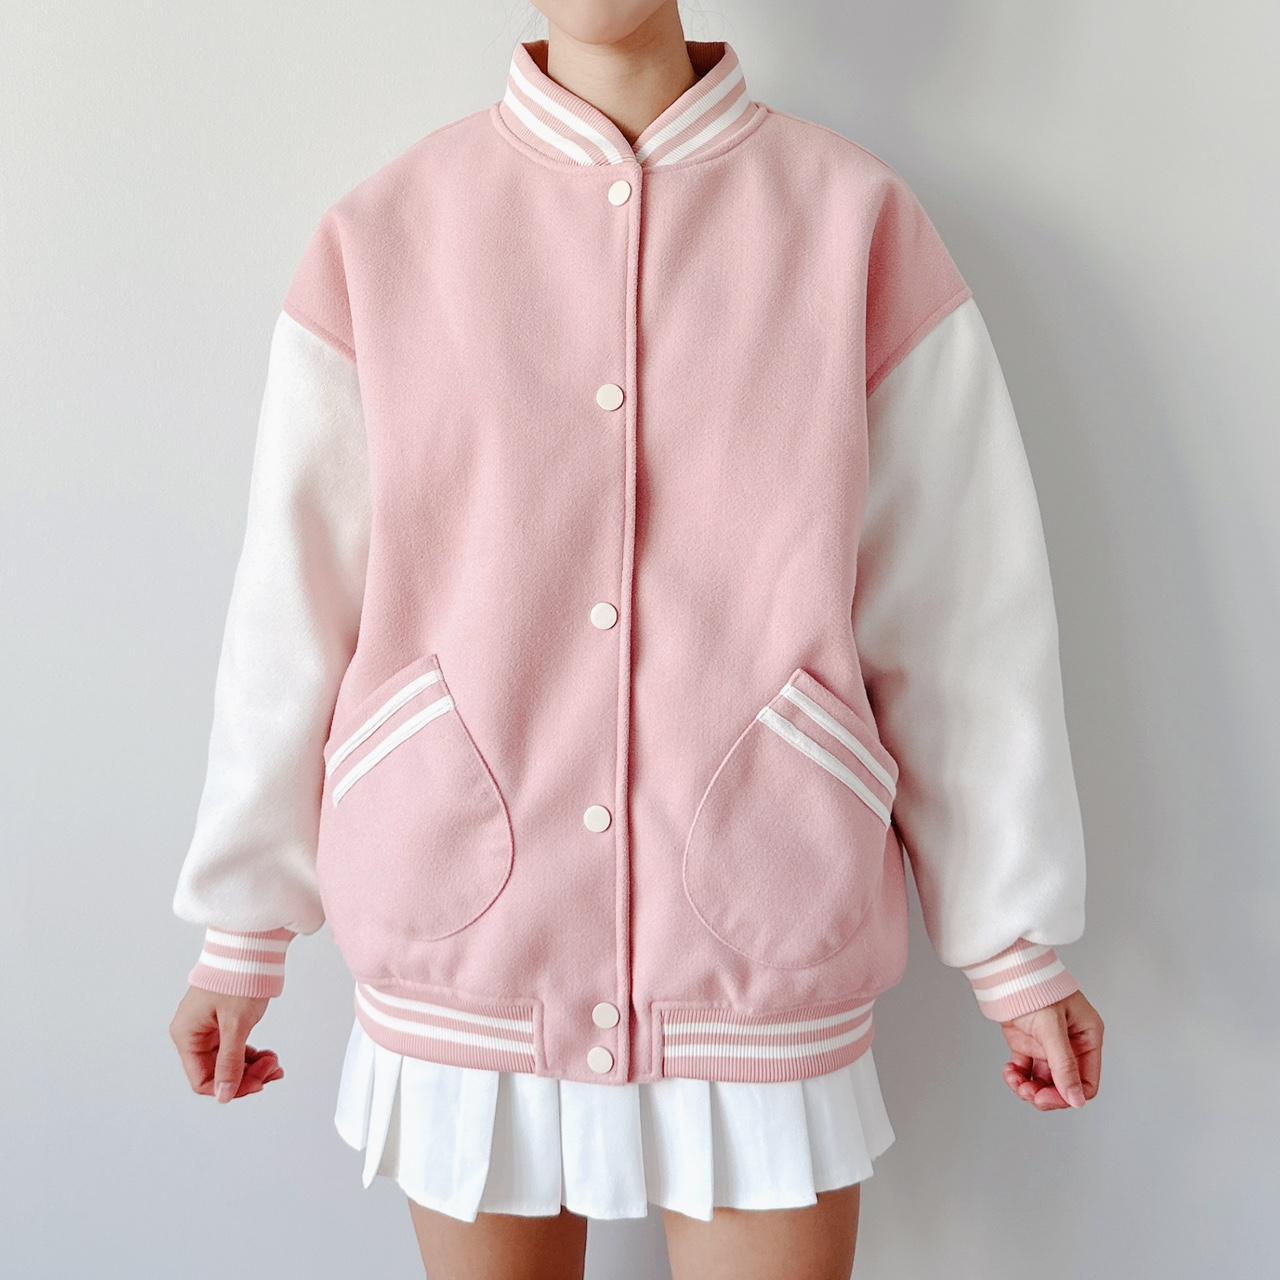 pink baseball jacket